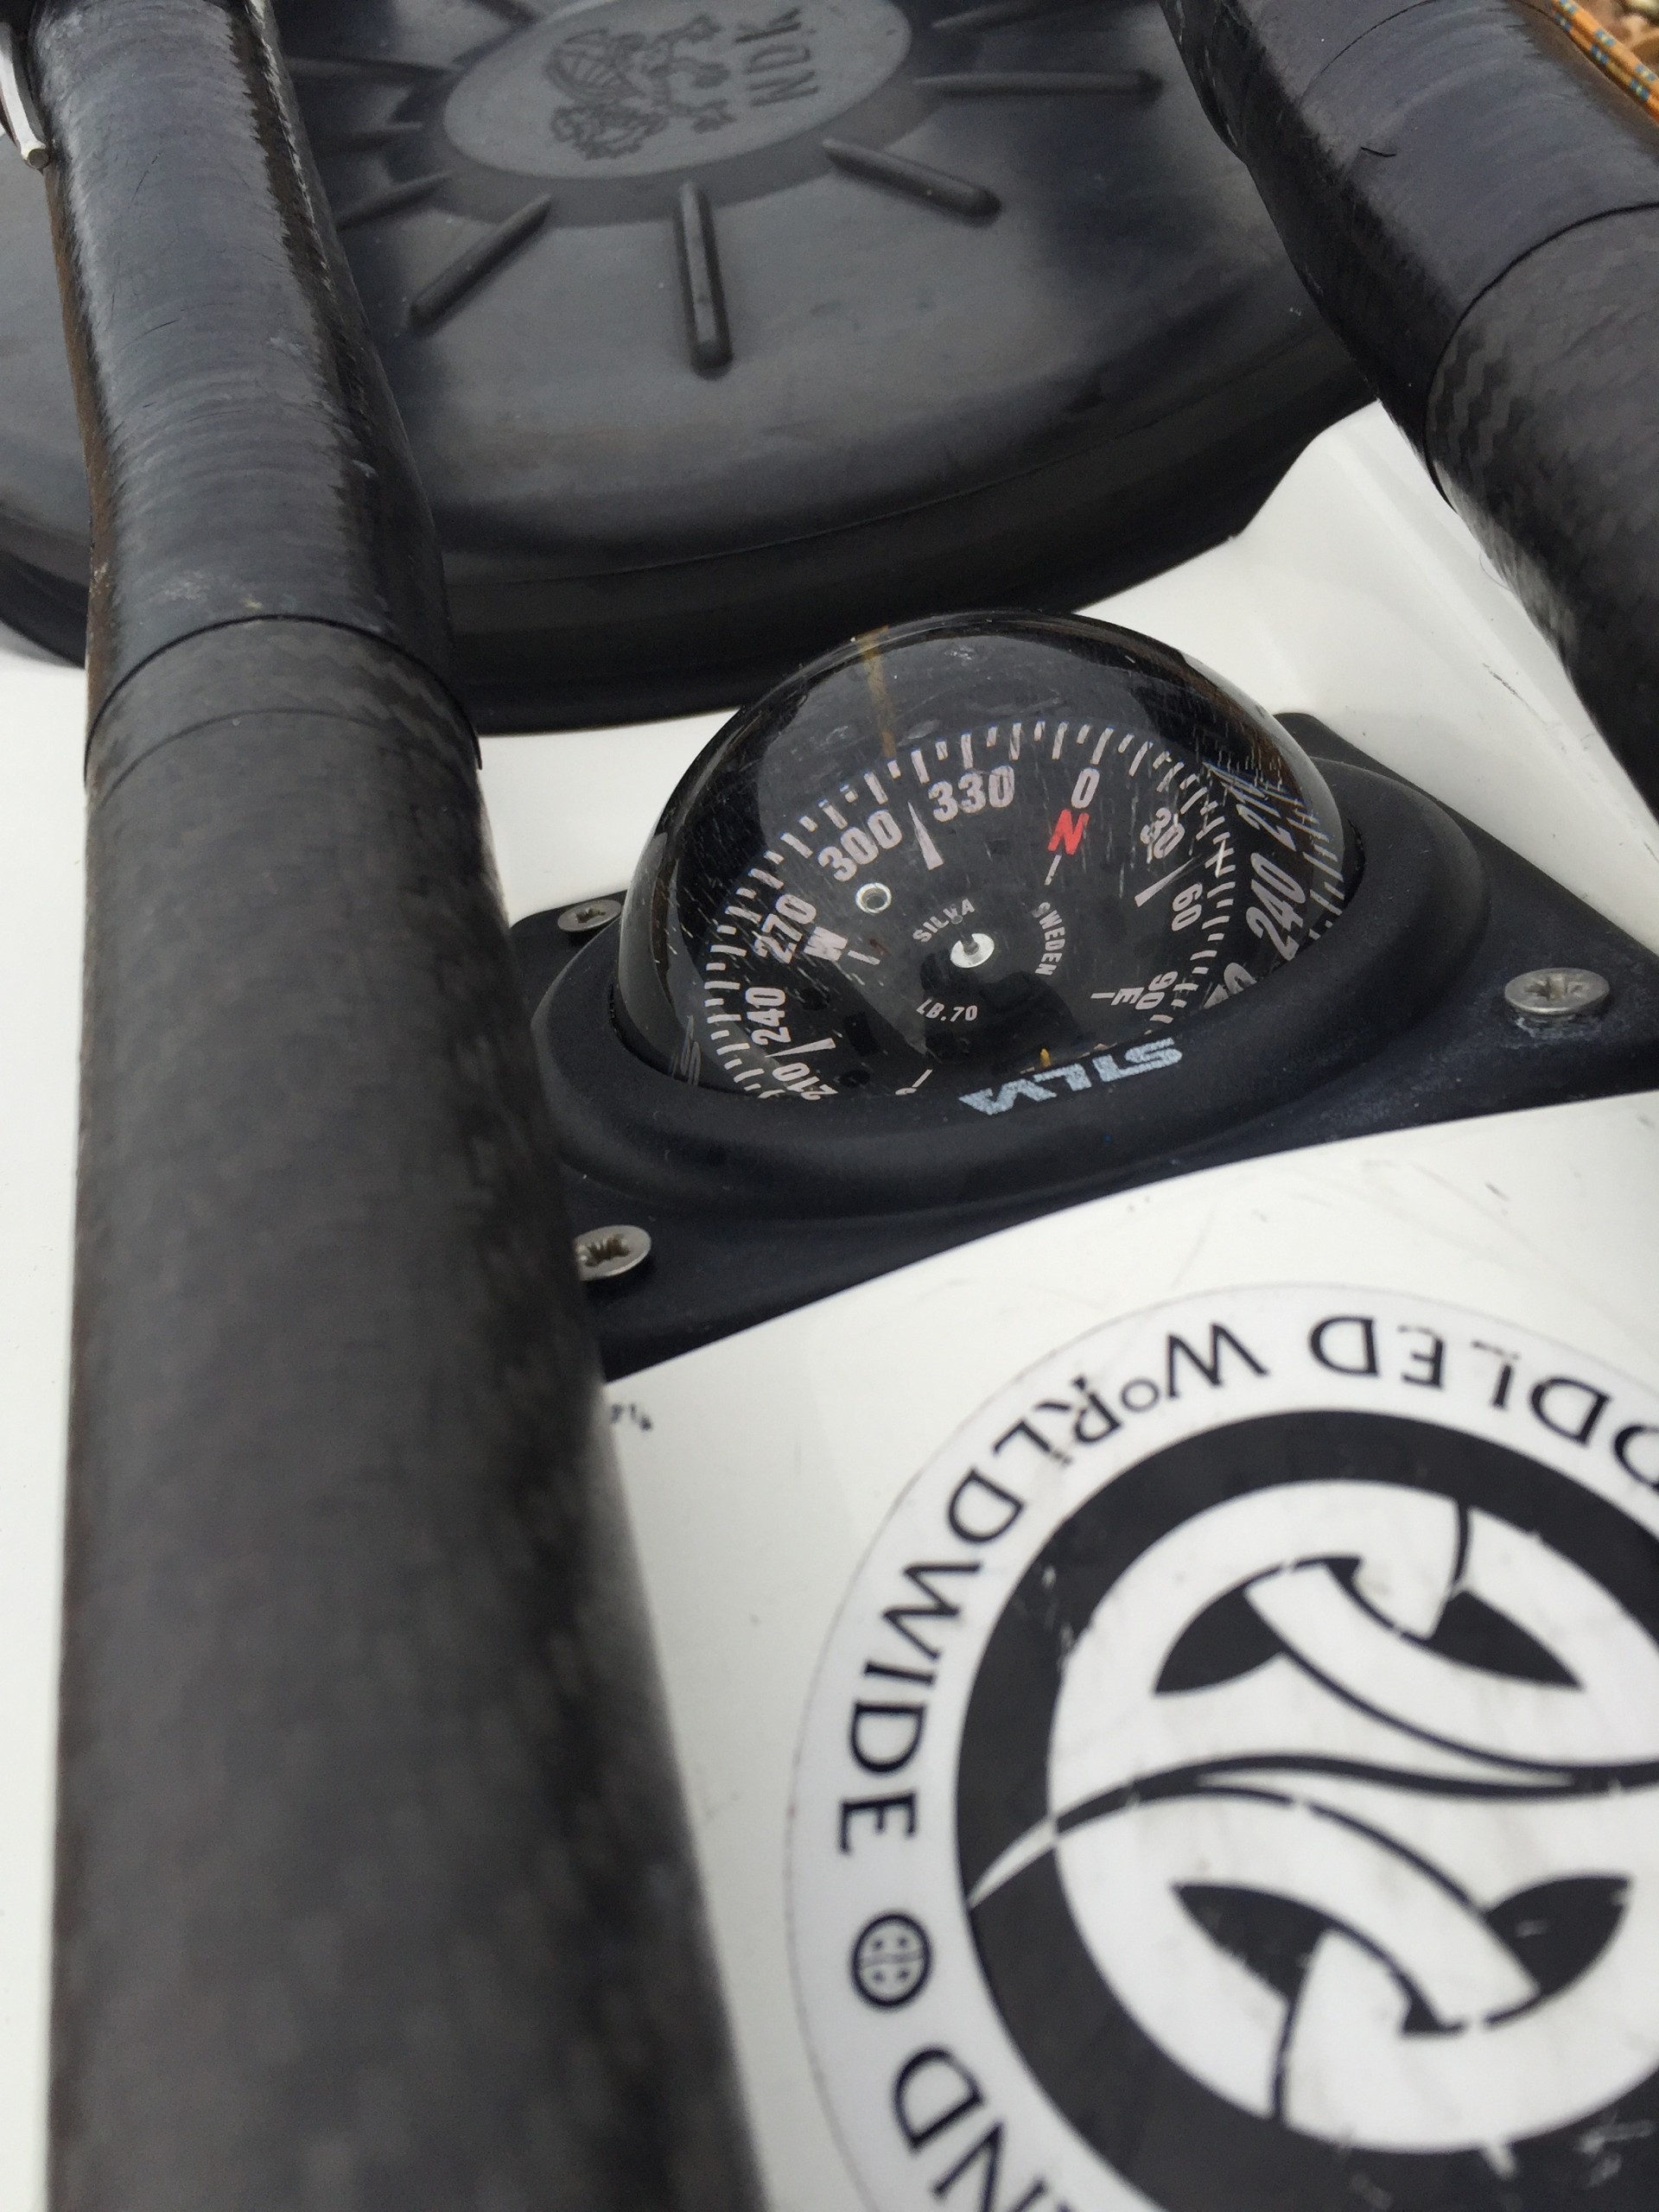 A deck compass on an expedition sea kayak.